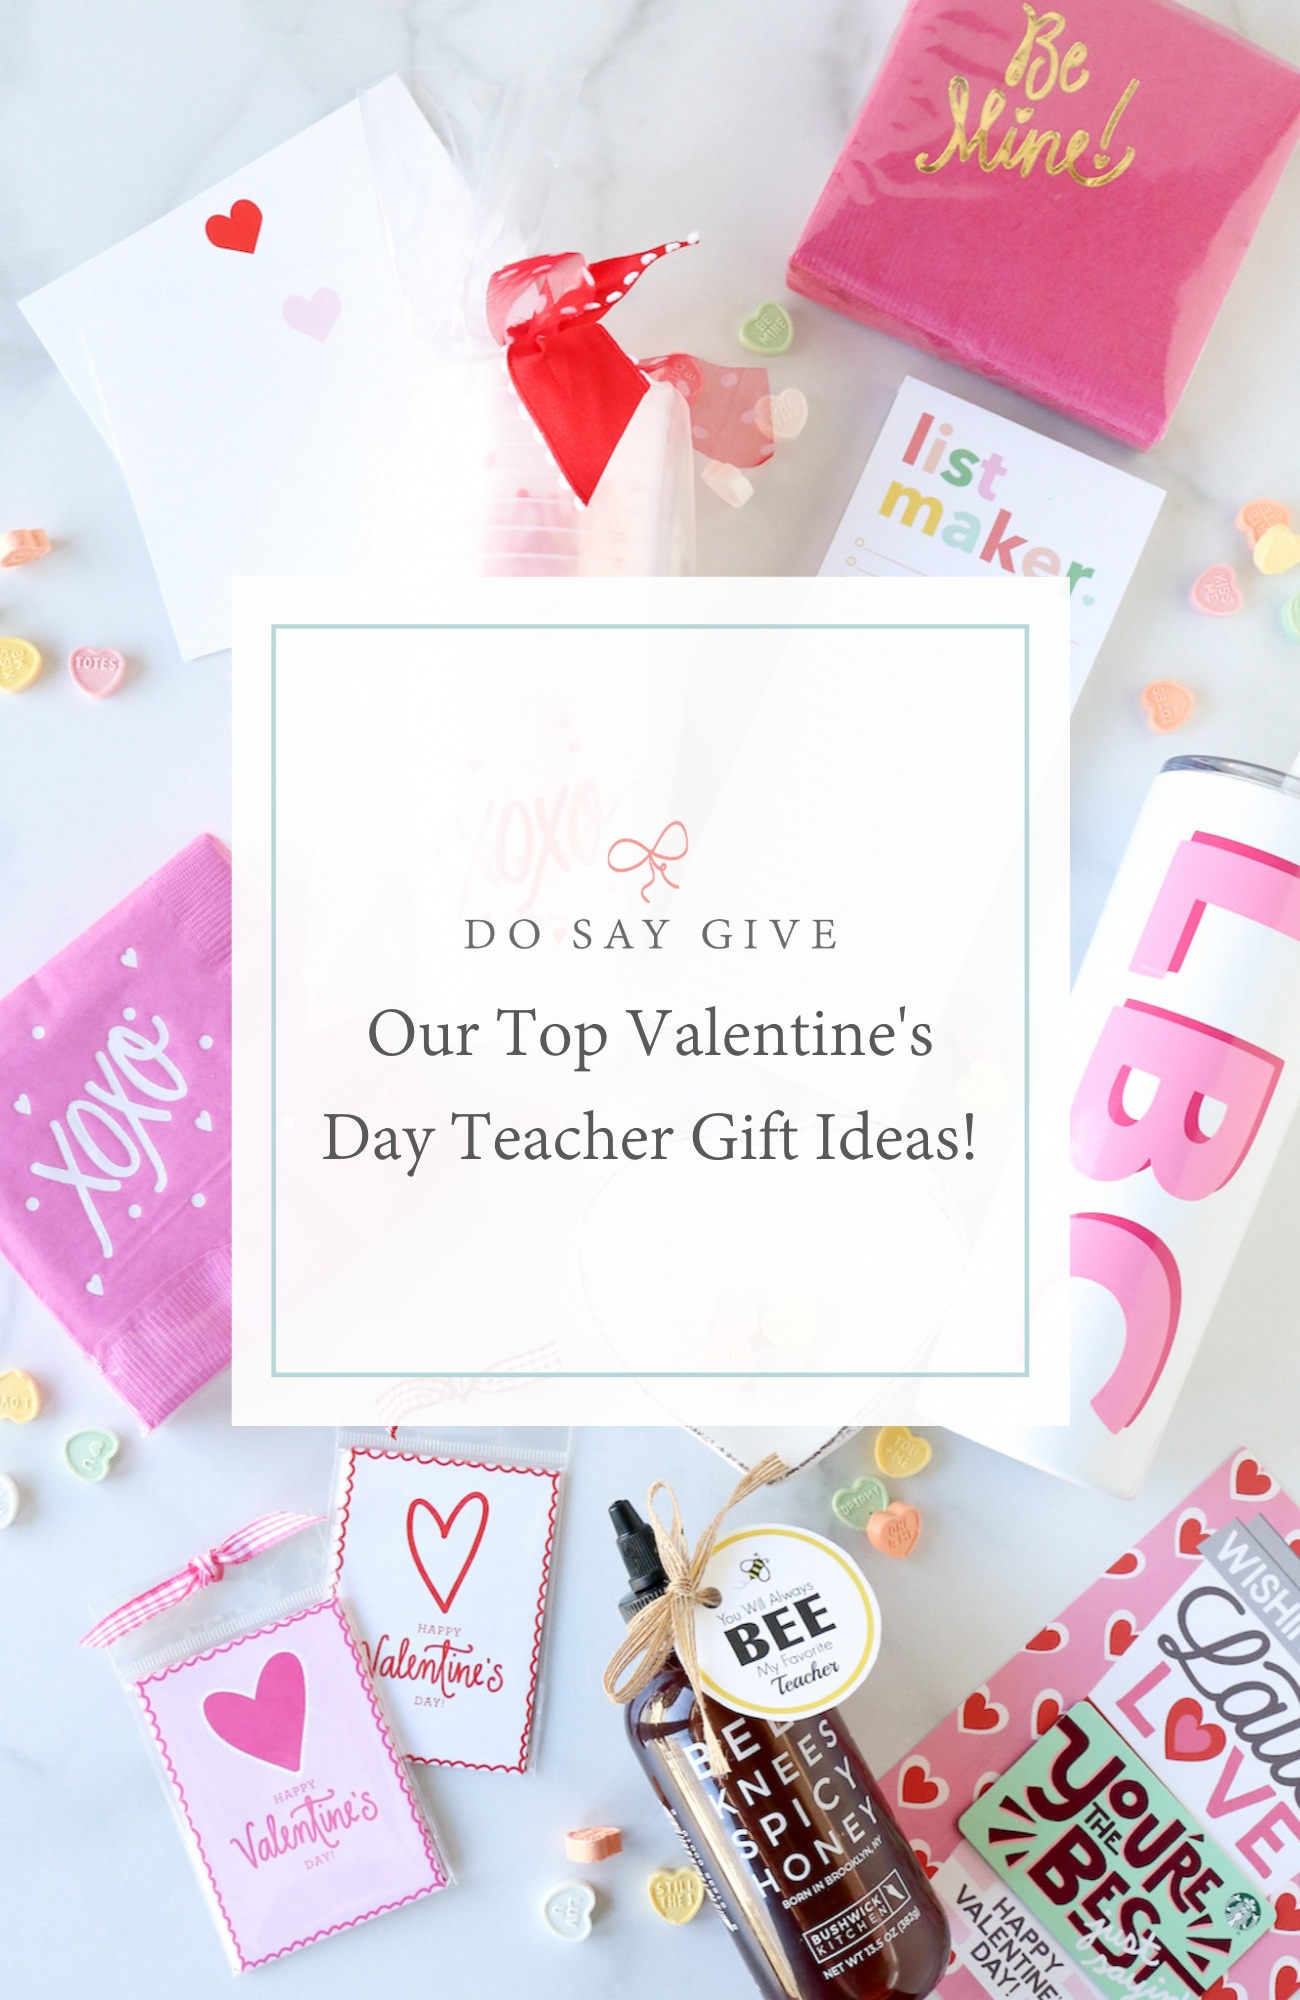 Our Top Valentine's Day Teacher Gift Ideas!